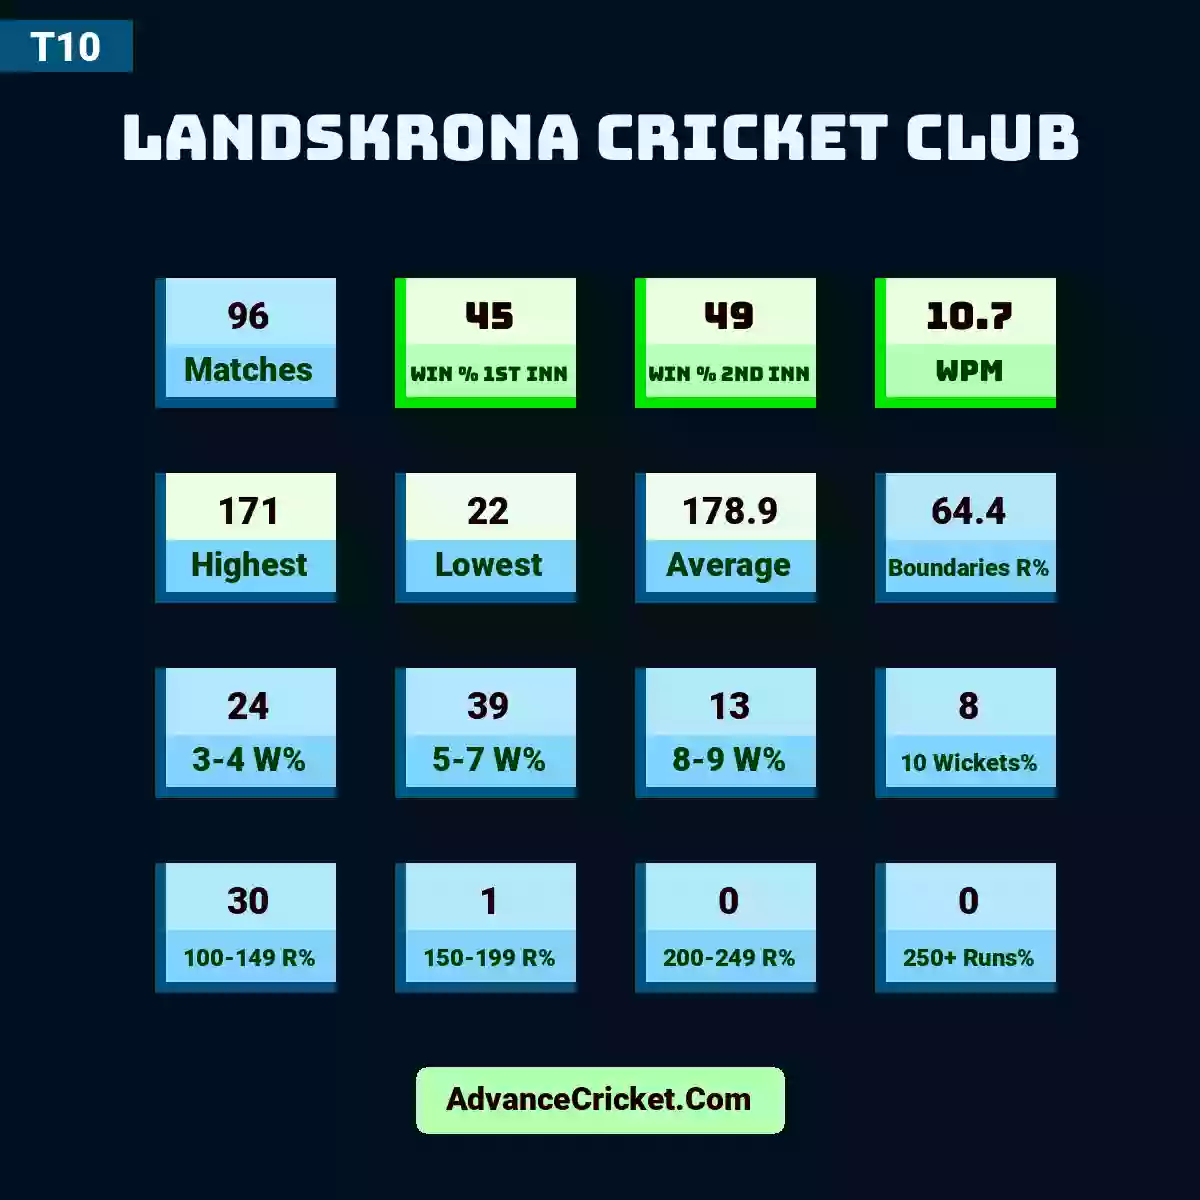 Image showing Landskrona Cricket Club with Matches: 96, Win % 1st Inn: 45, Win % 2nd Inn: 49, WPM: 10.7, Highest: 171, Lowest: 22, Average: 178.9, Boundaries R%: 64.4, 3-4 W%: 24, 5-7 W%: 39, 8-9 W%: 13, 10 Wickets%: 8, 100-149 R%: 30, 150-199 R%: 1, 200-249 R%: 0, 250+ Runs%: 0.